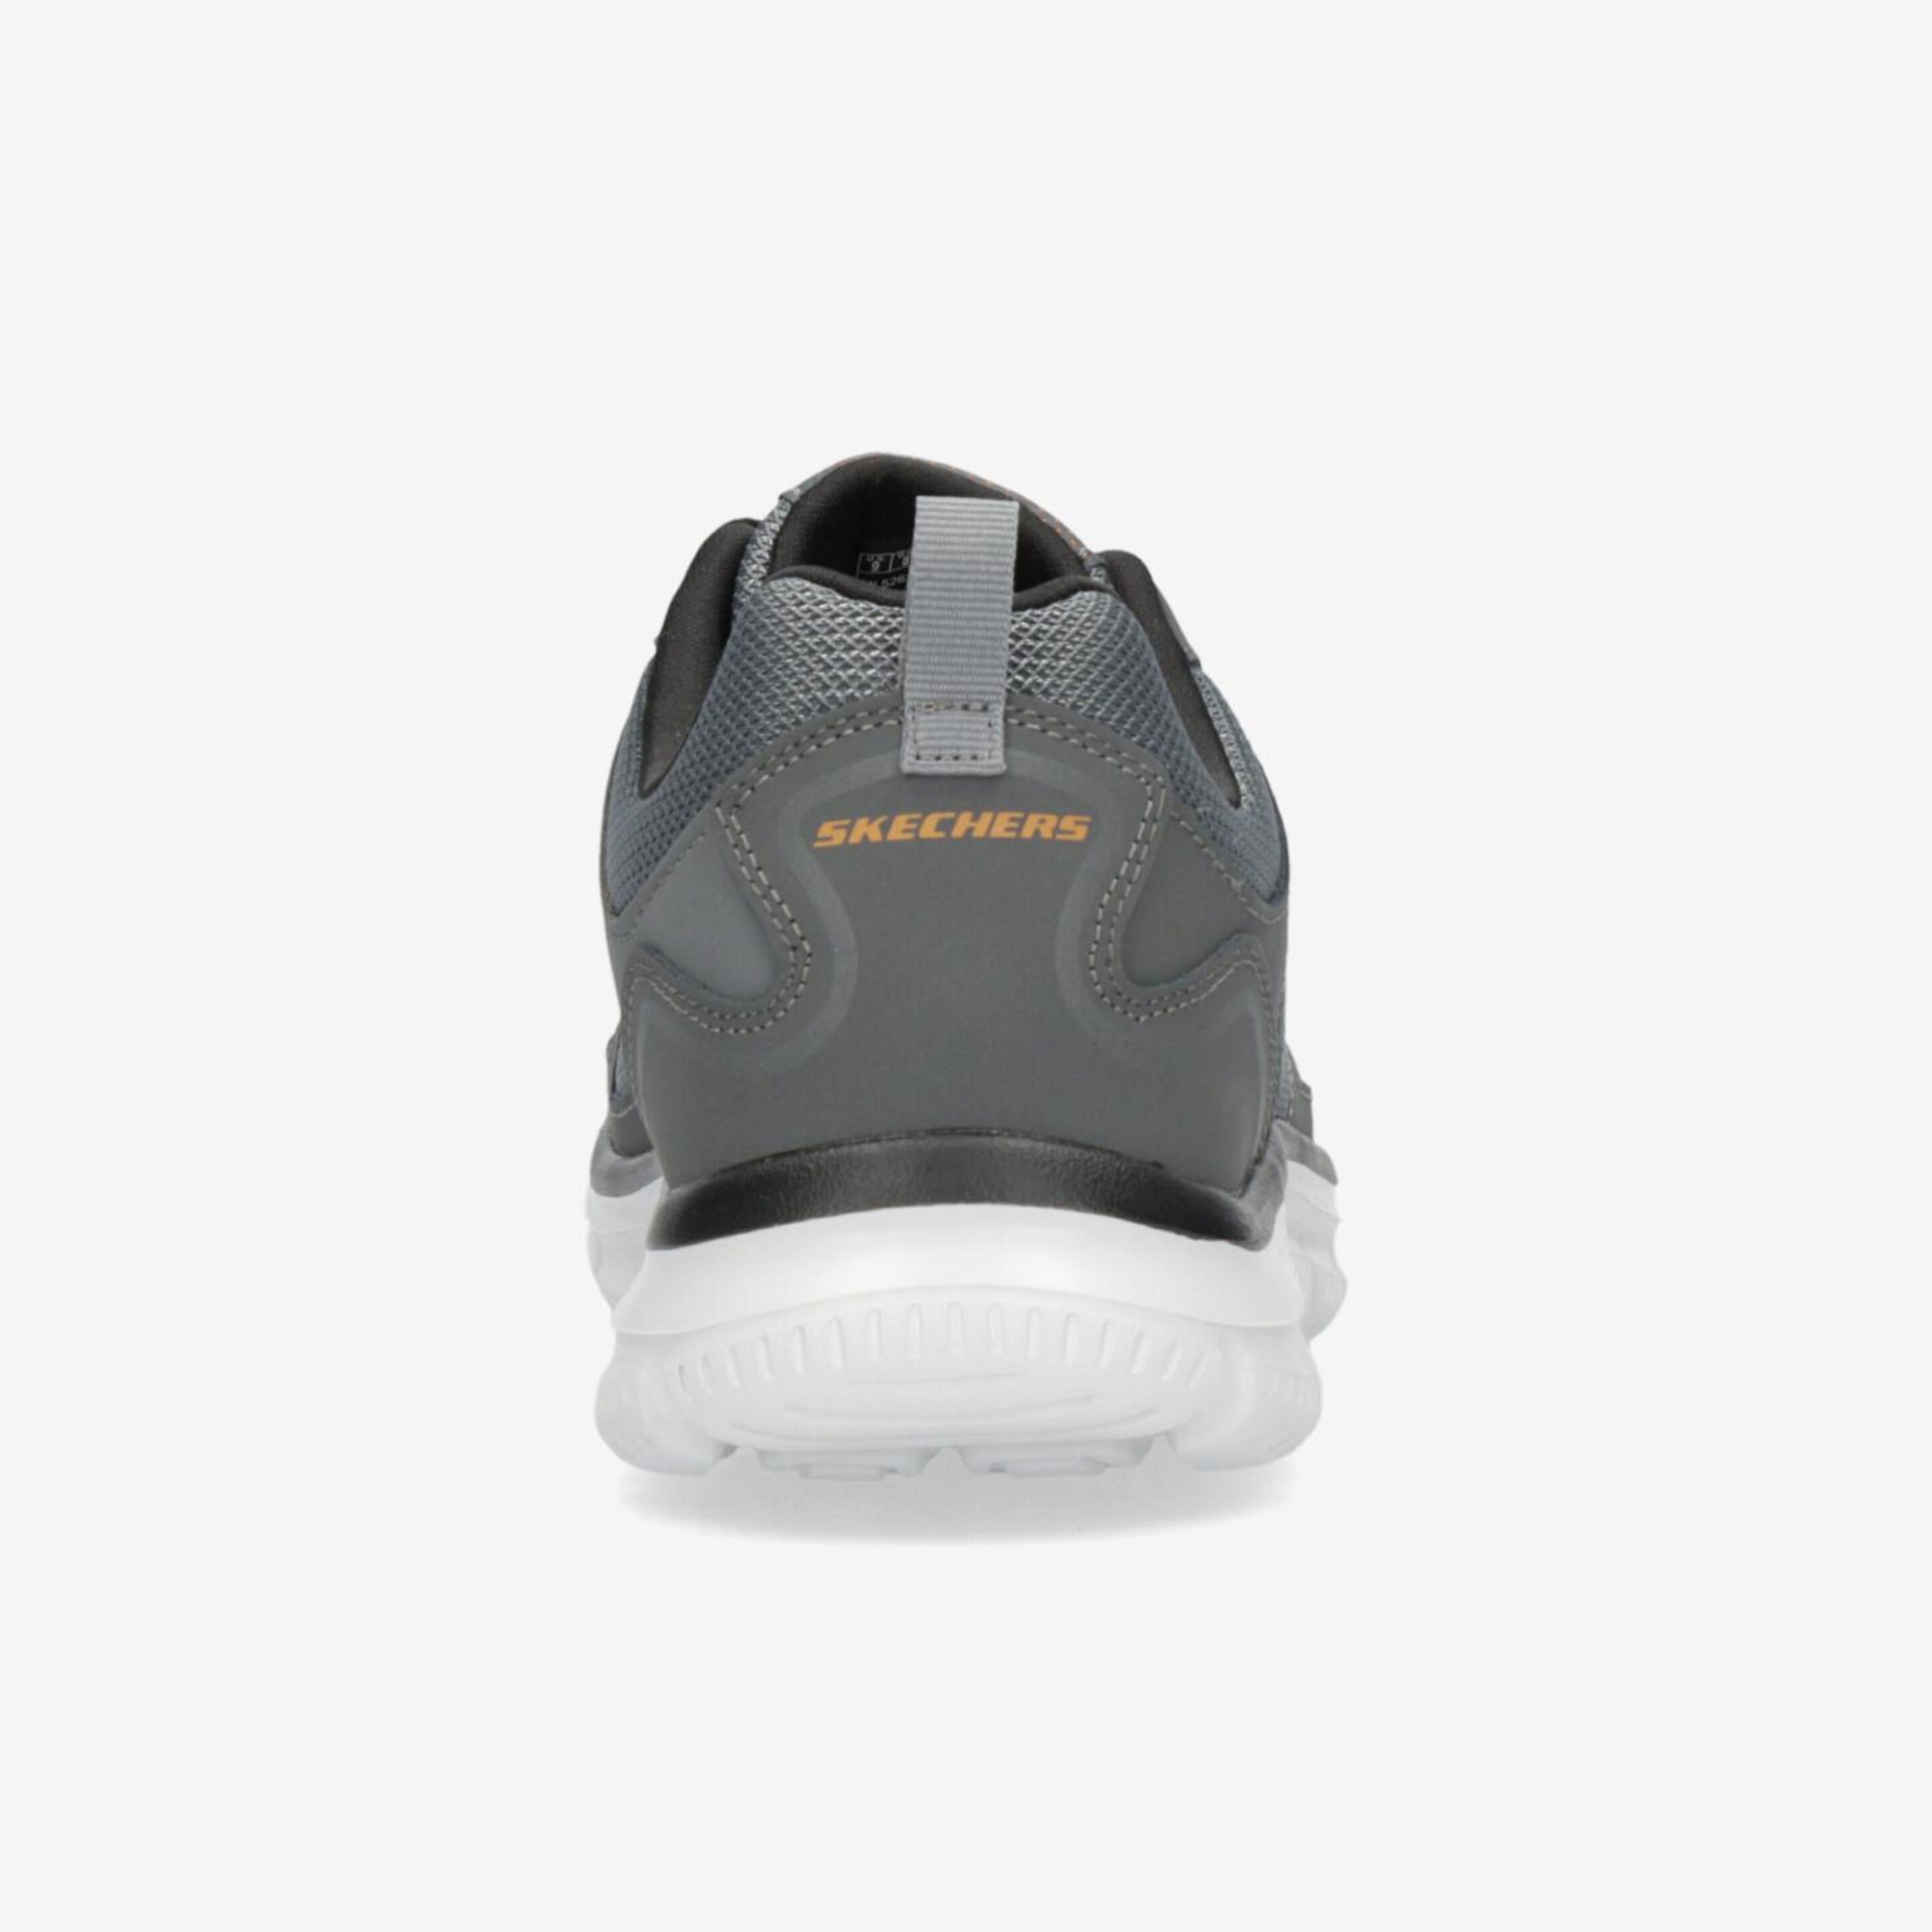 Skechers Track-scloric. Charcoal/black. 52631/ccbk